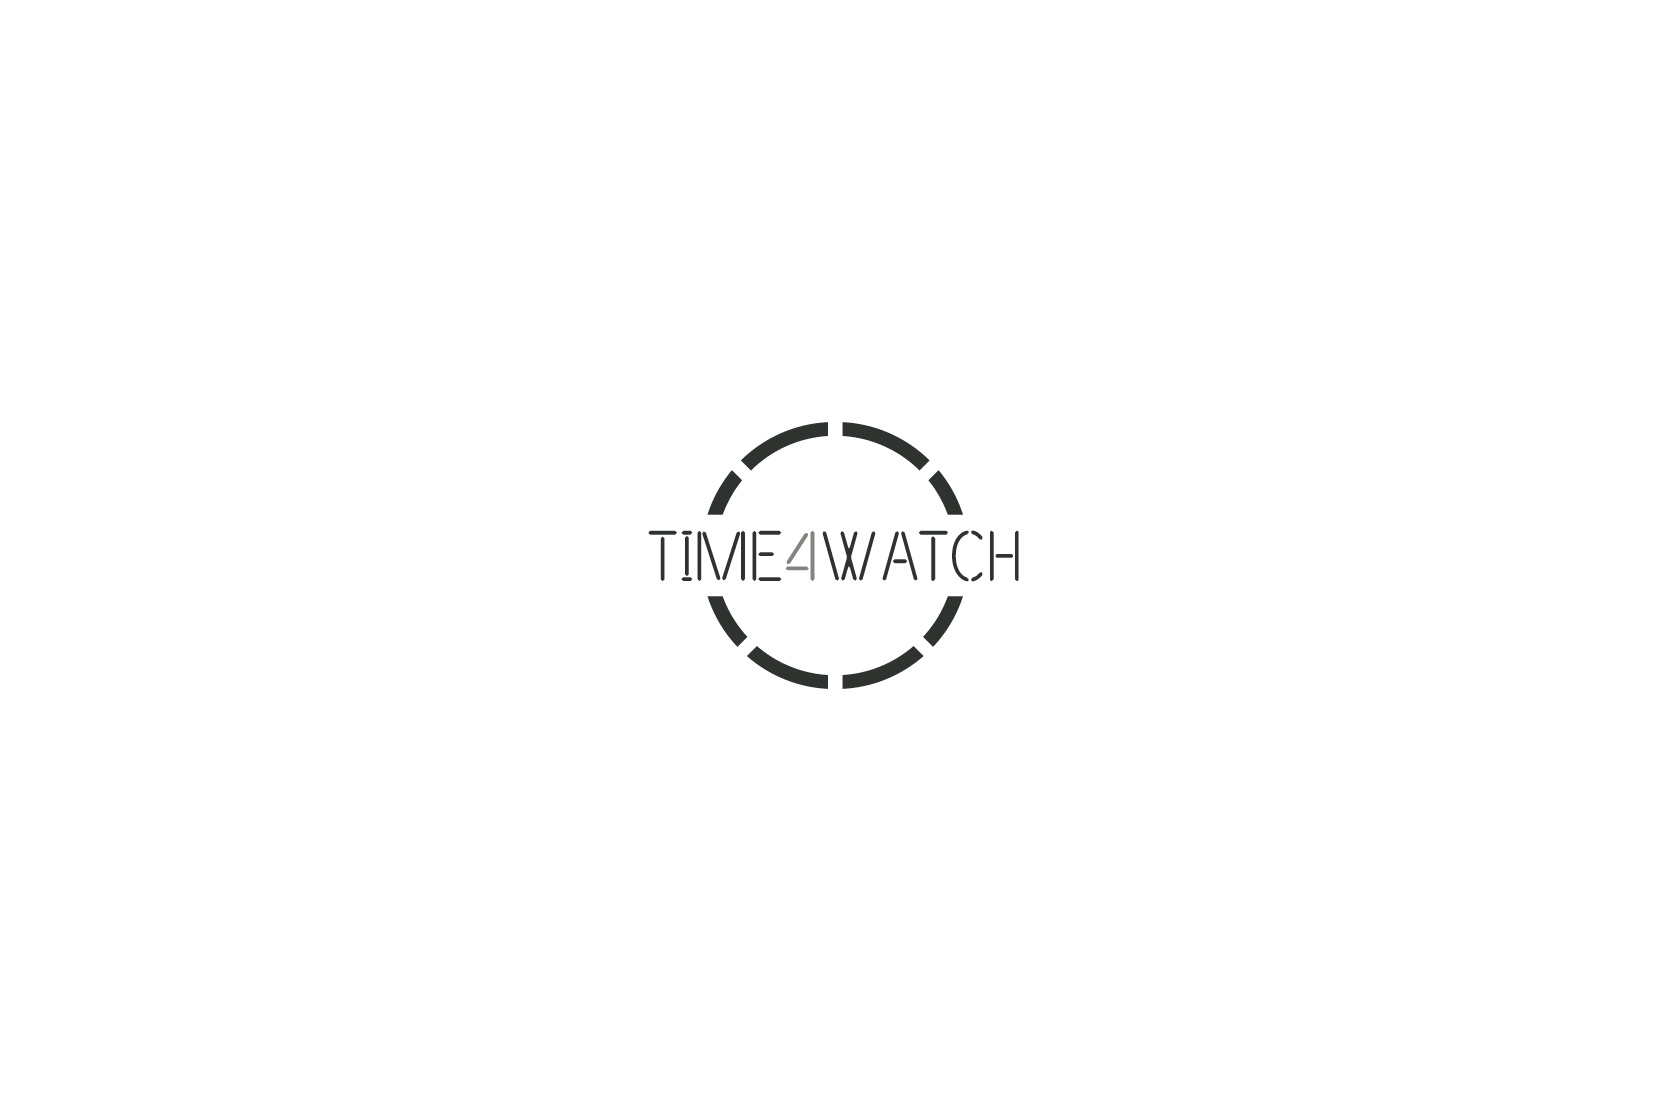 Time4watch logo